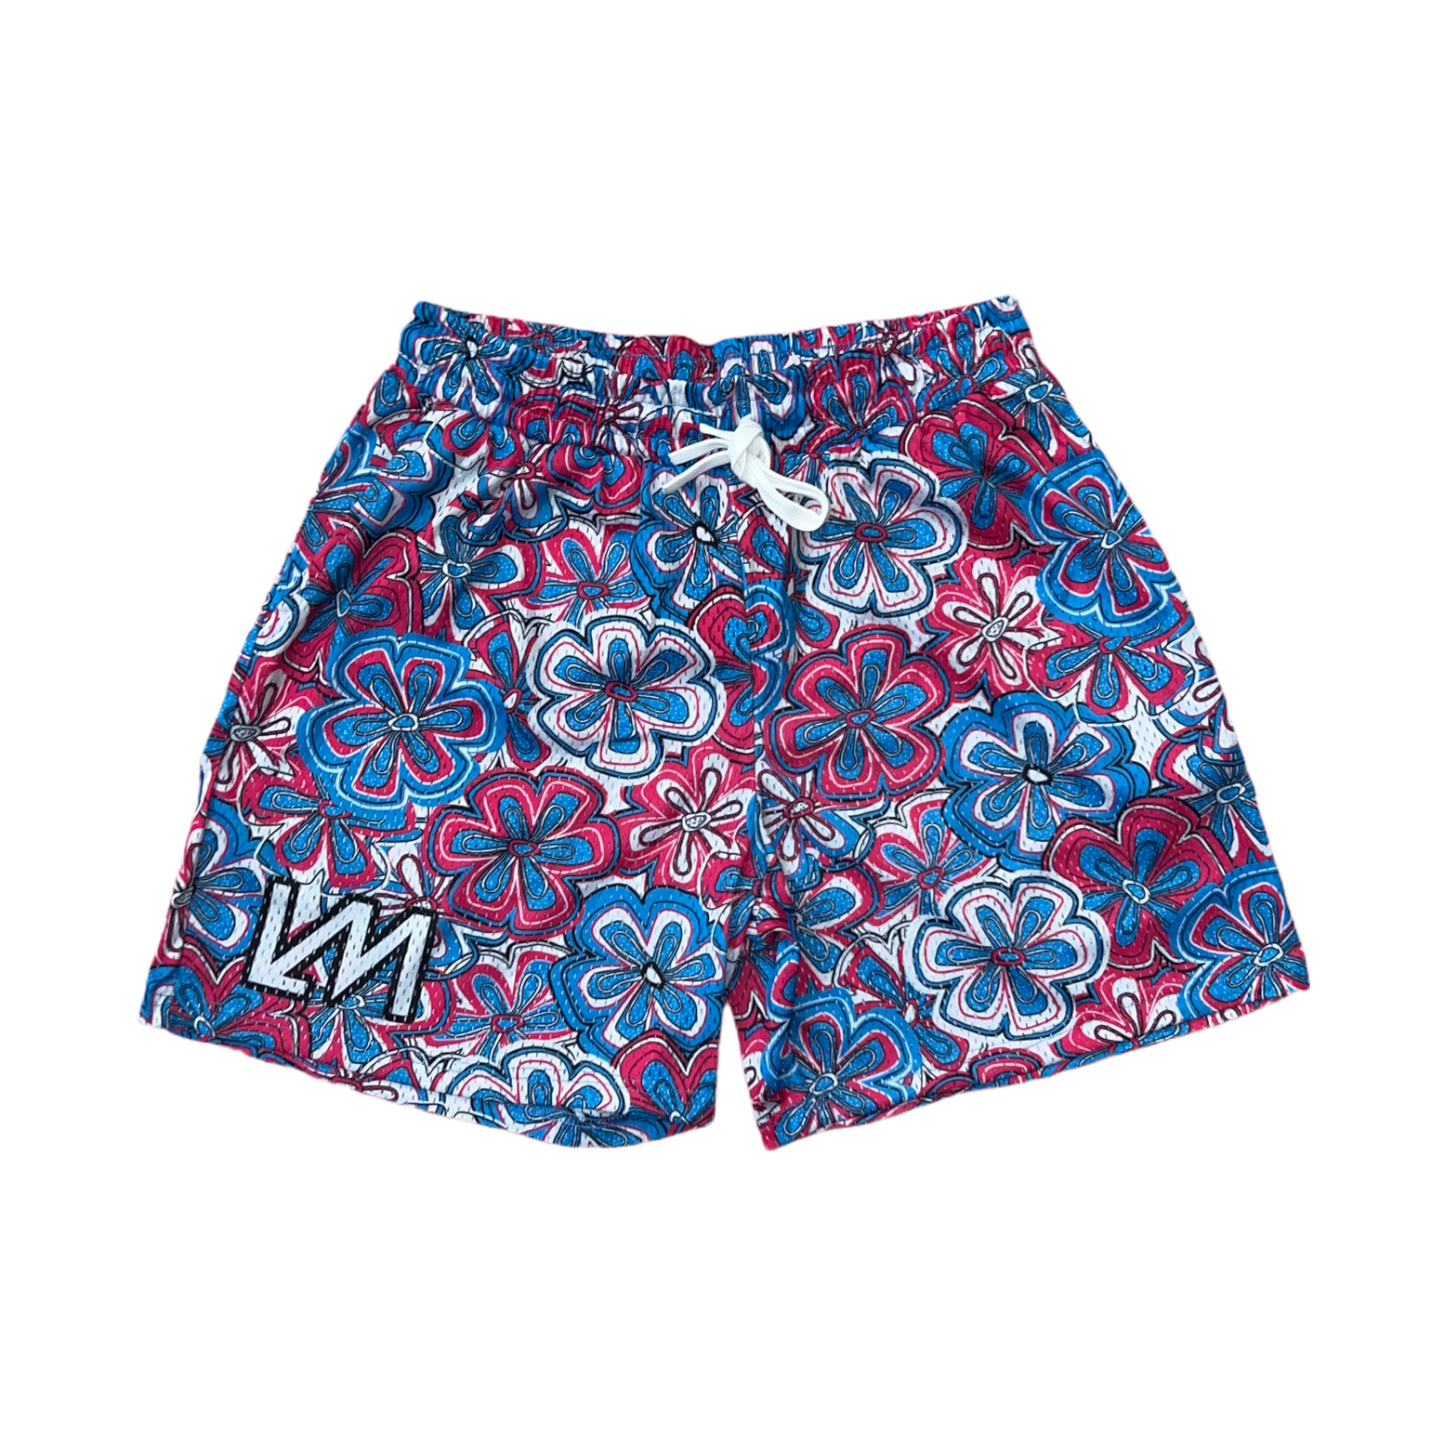 Miami Vice shorts - LVMLOSANGELES